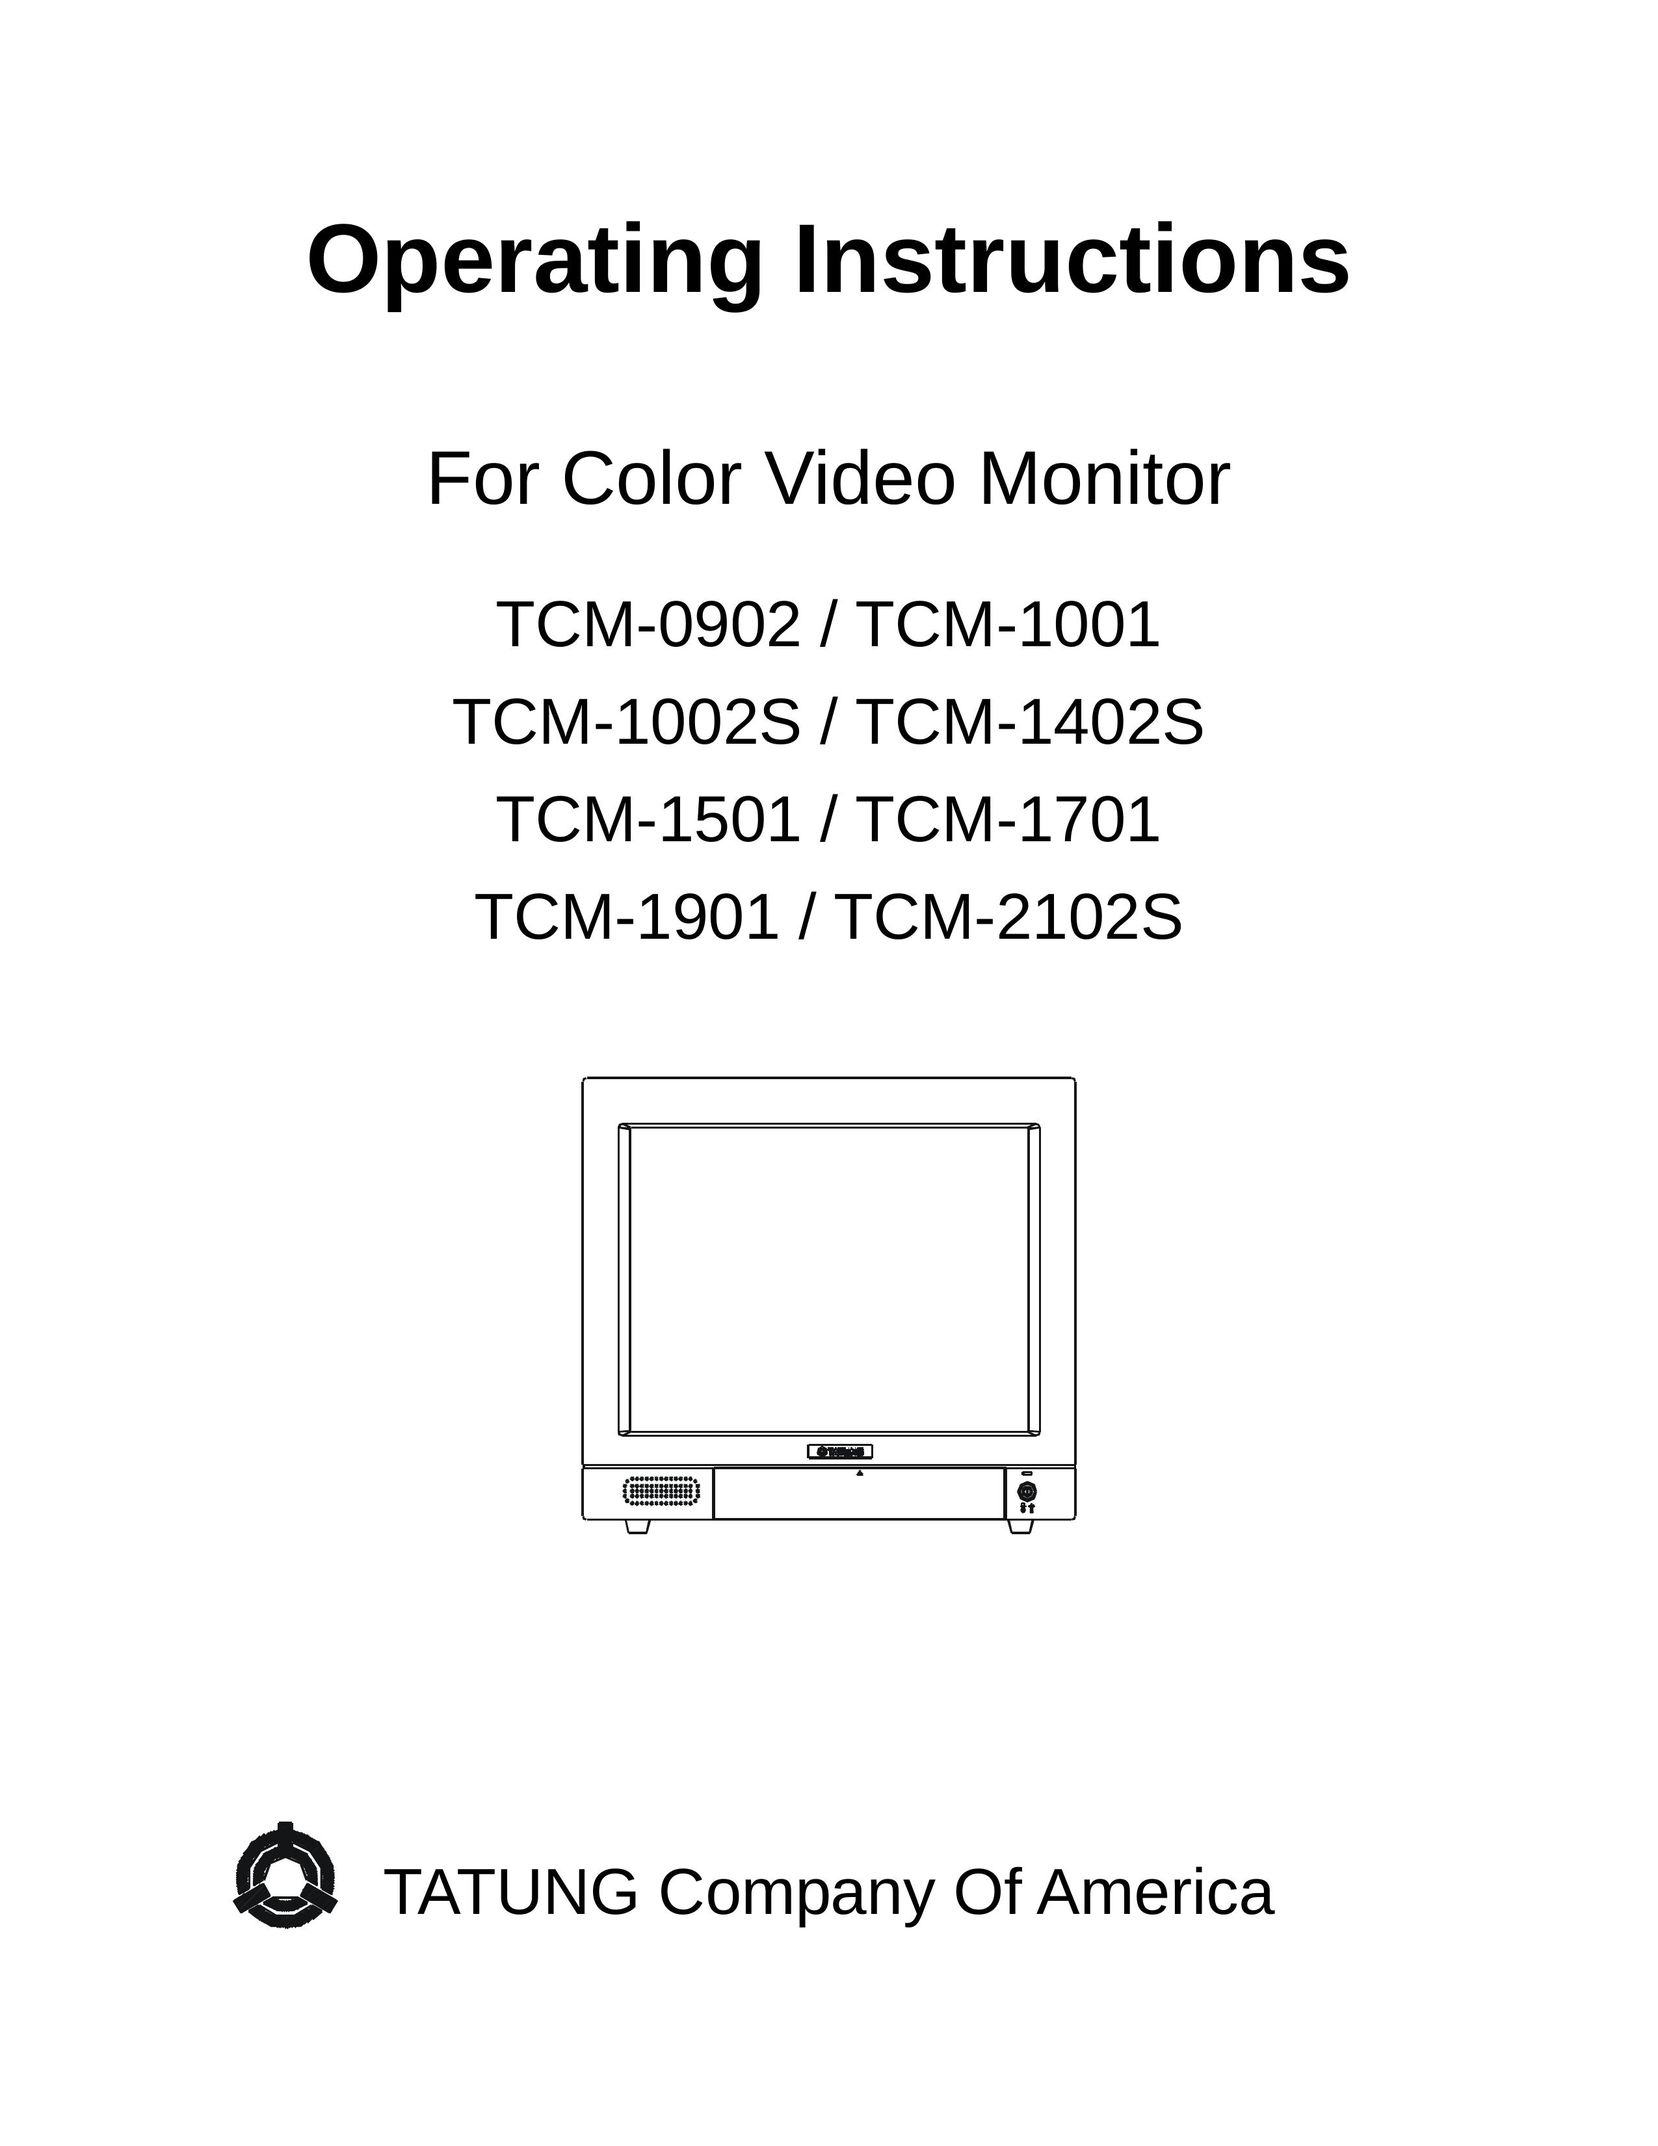 Tatung TCM-1001 Home Theater Screen User Manual